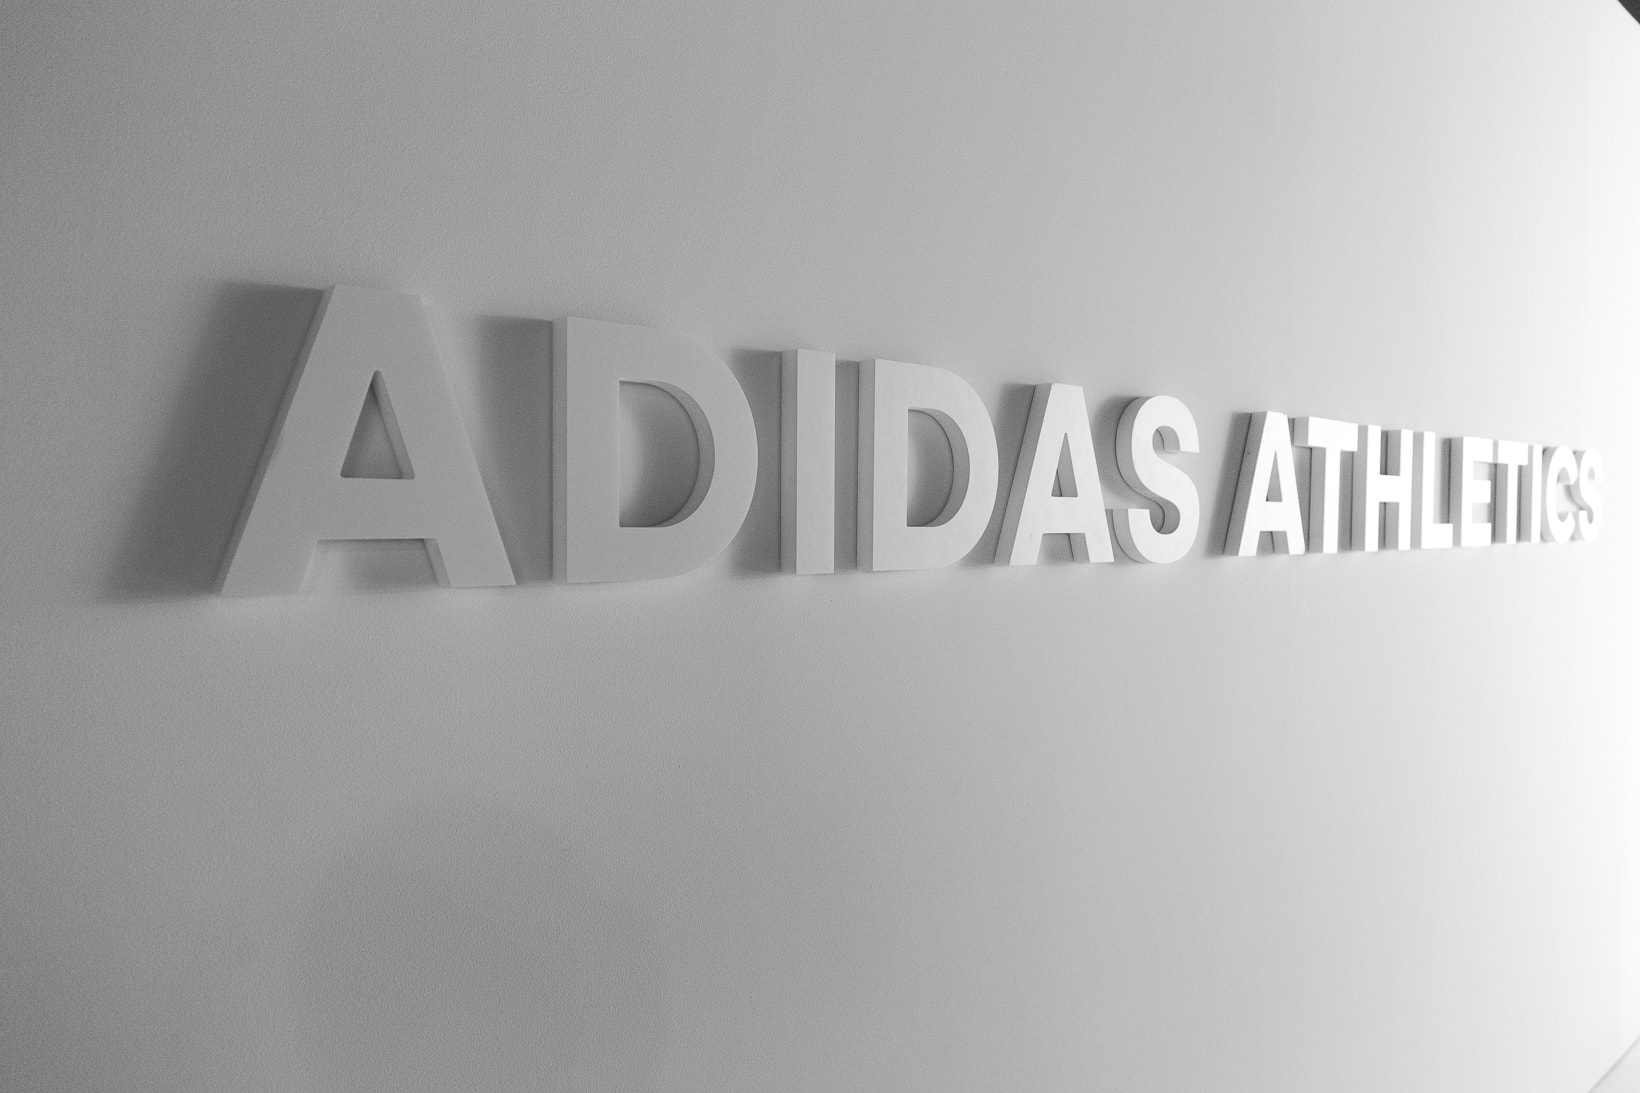 adidas Athletics FINDFOCUS NYC Event Joakim Noah Andrew Wiggins Tori Bowie